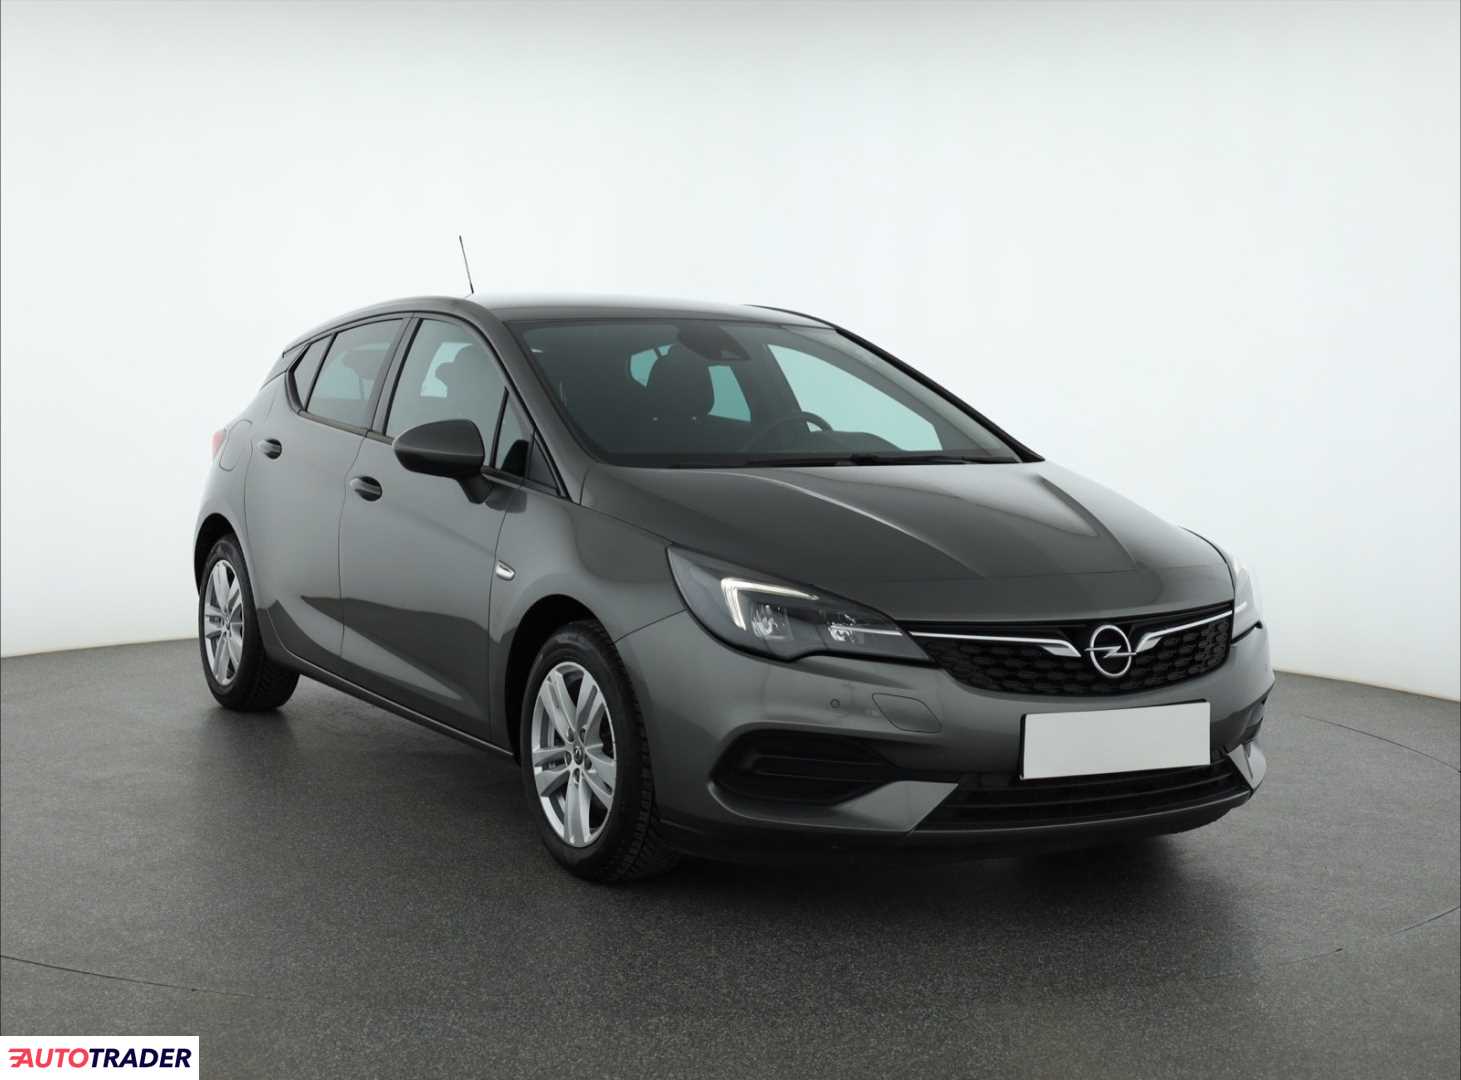 Opel Astra 2019 1.2 143 KM